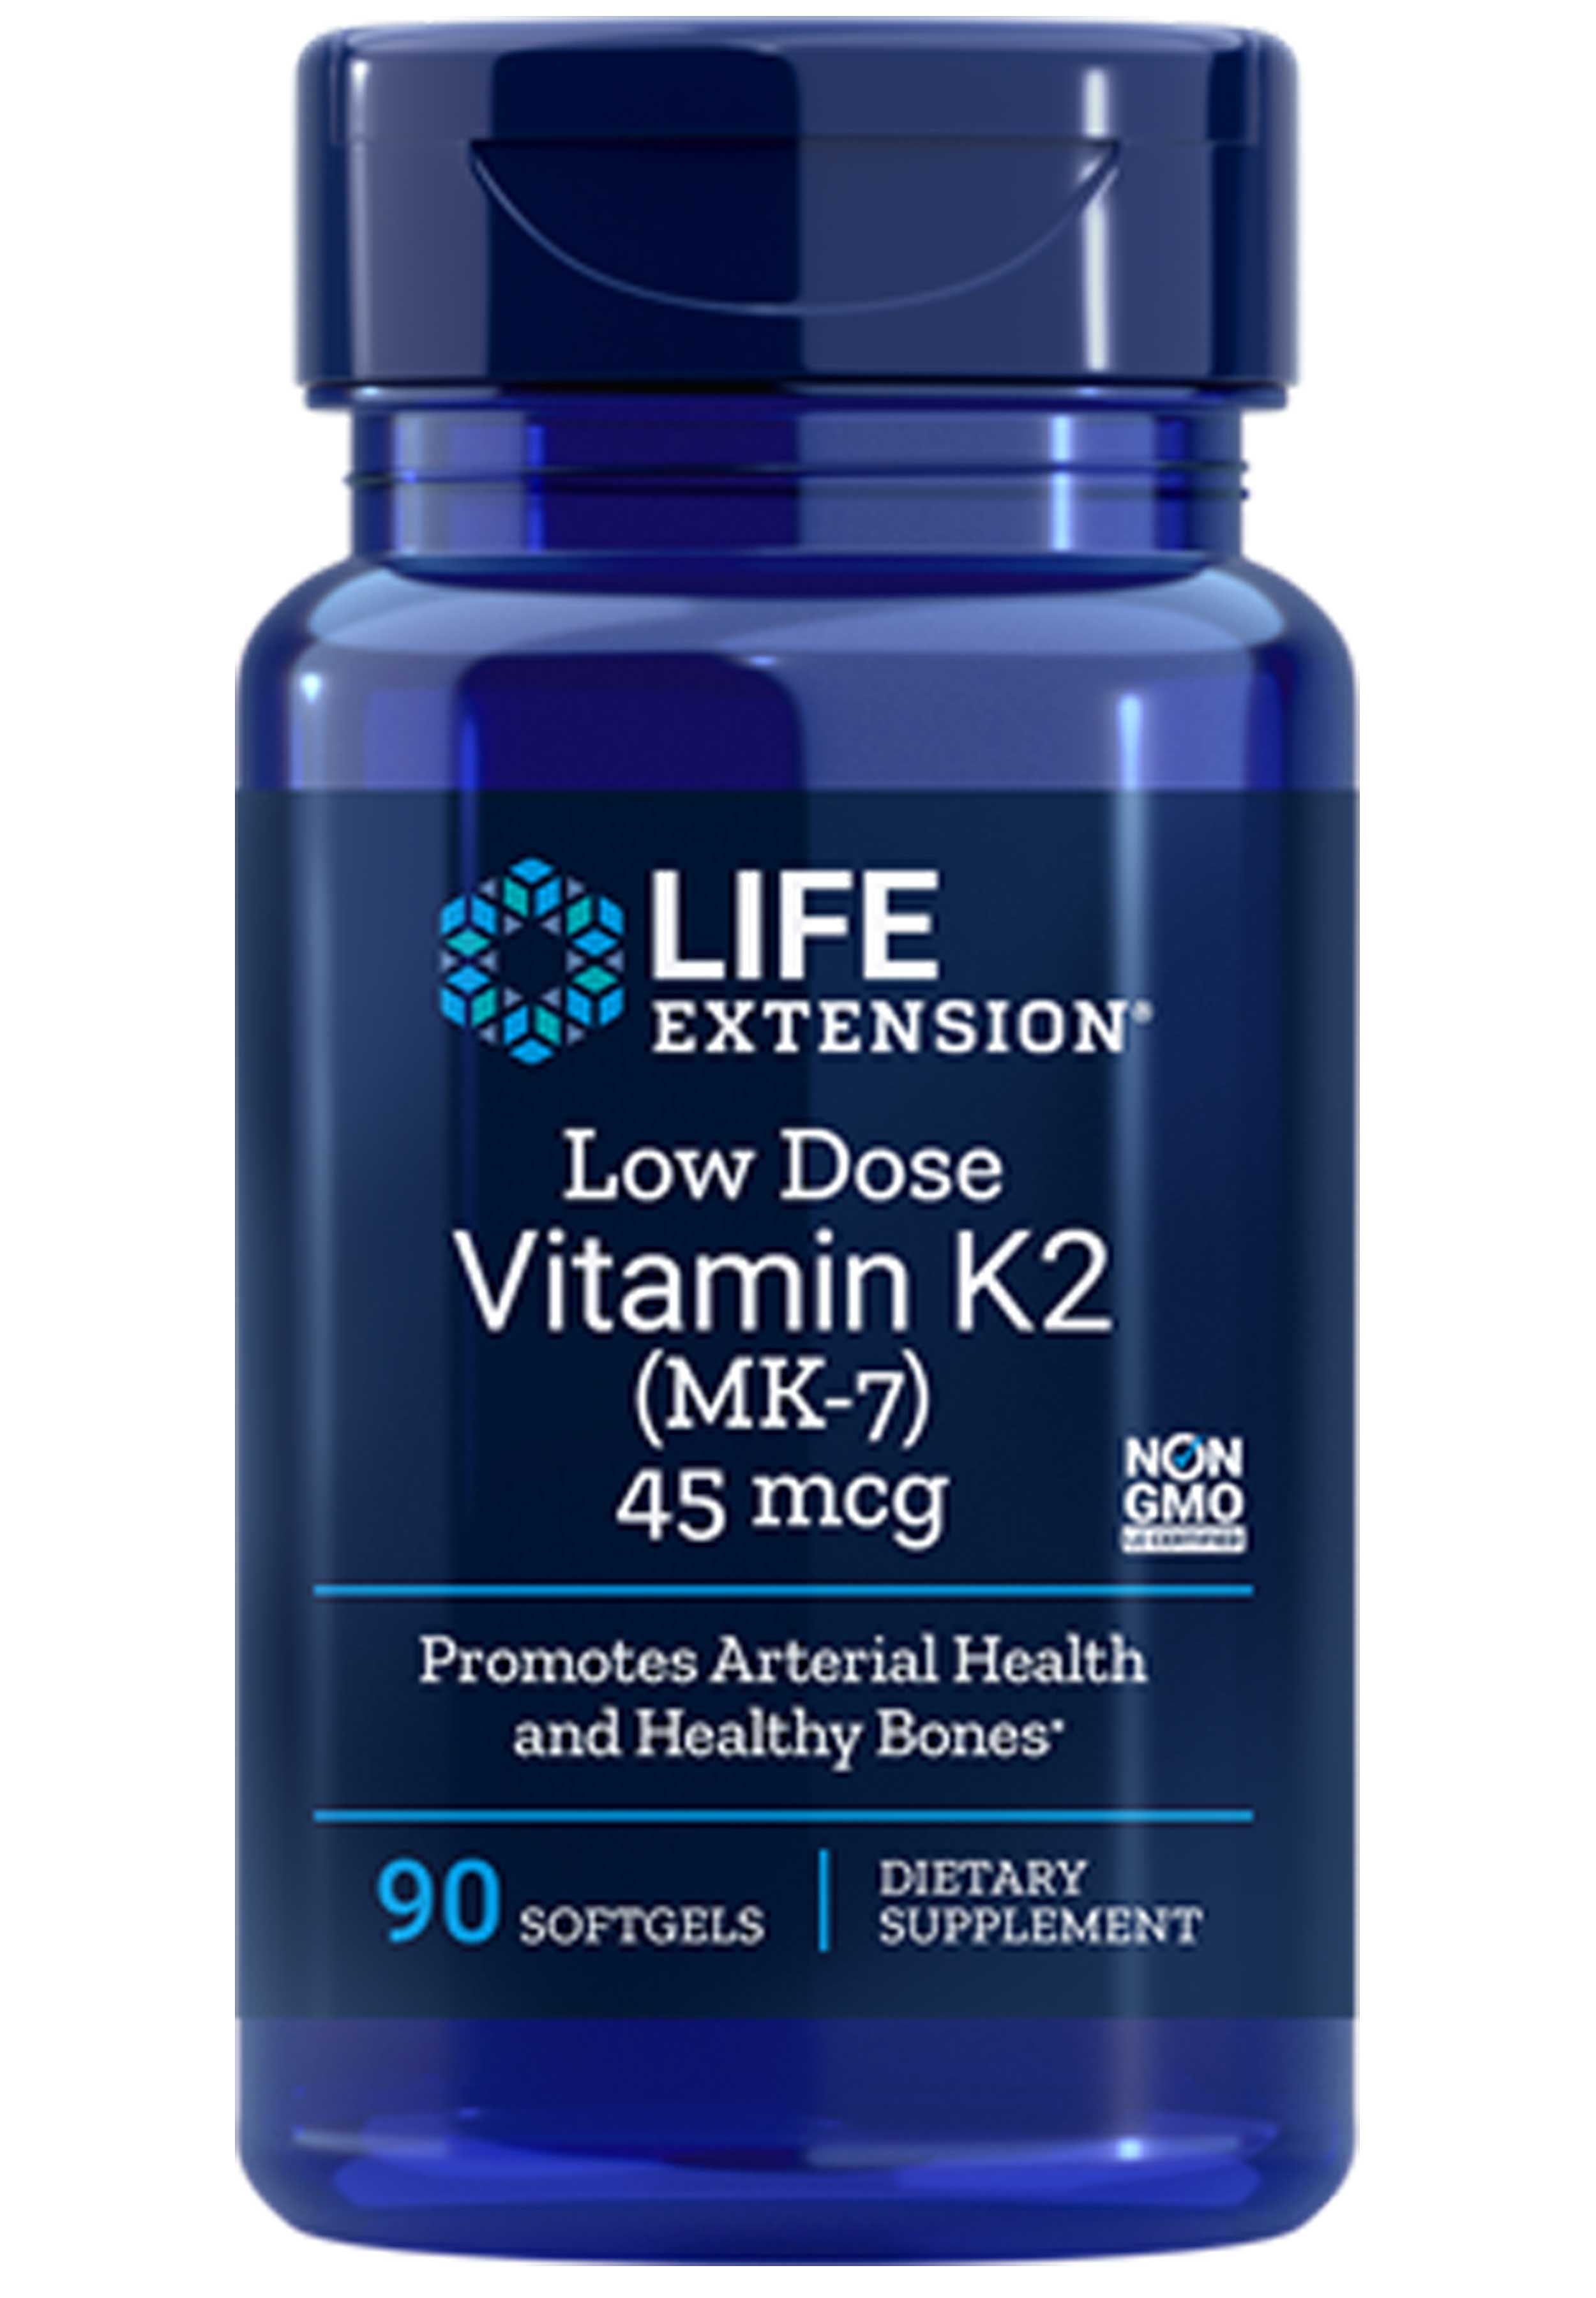 Life Extension Low-Dose Vitamin K2